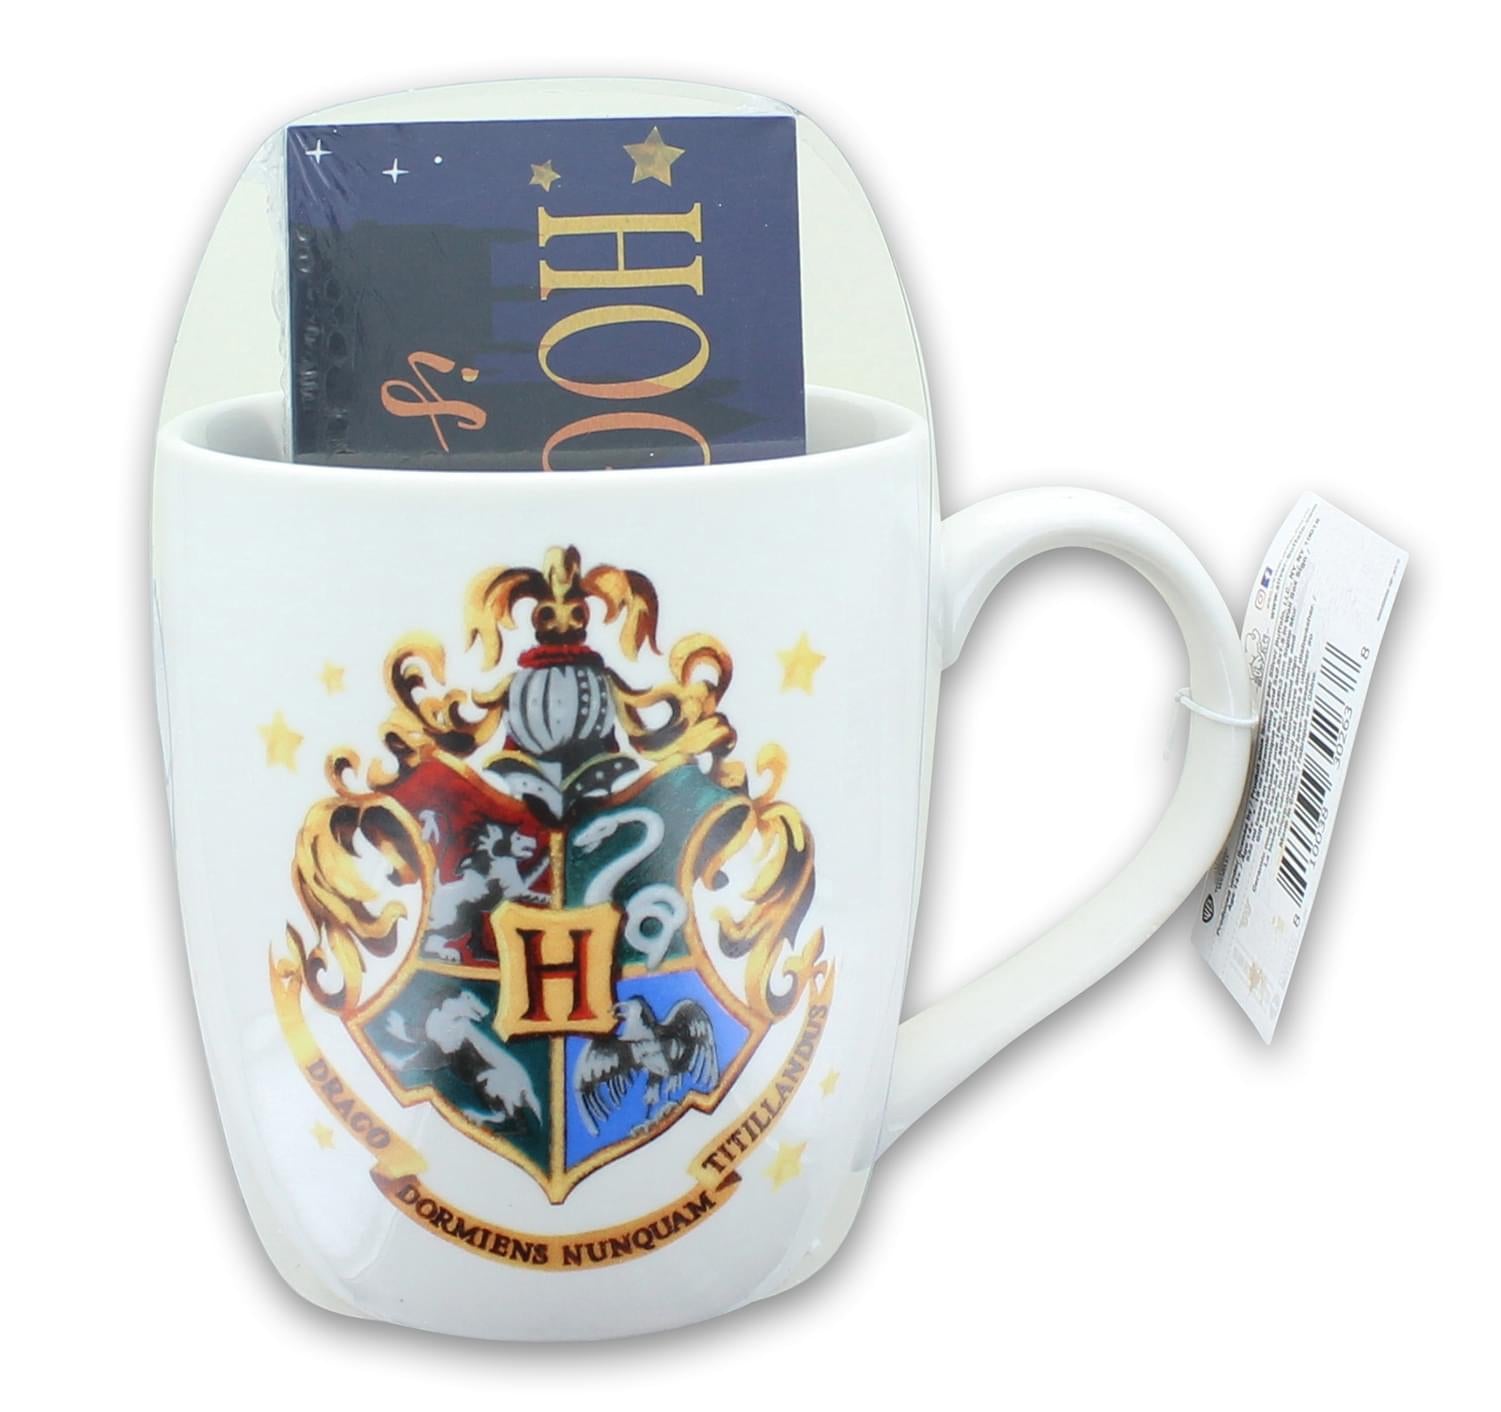 Harry Potter Hogwarts 18oz Ceramic Mug & 5 x 2.5 Inch Wall Sign Gift Set